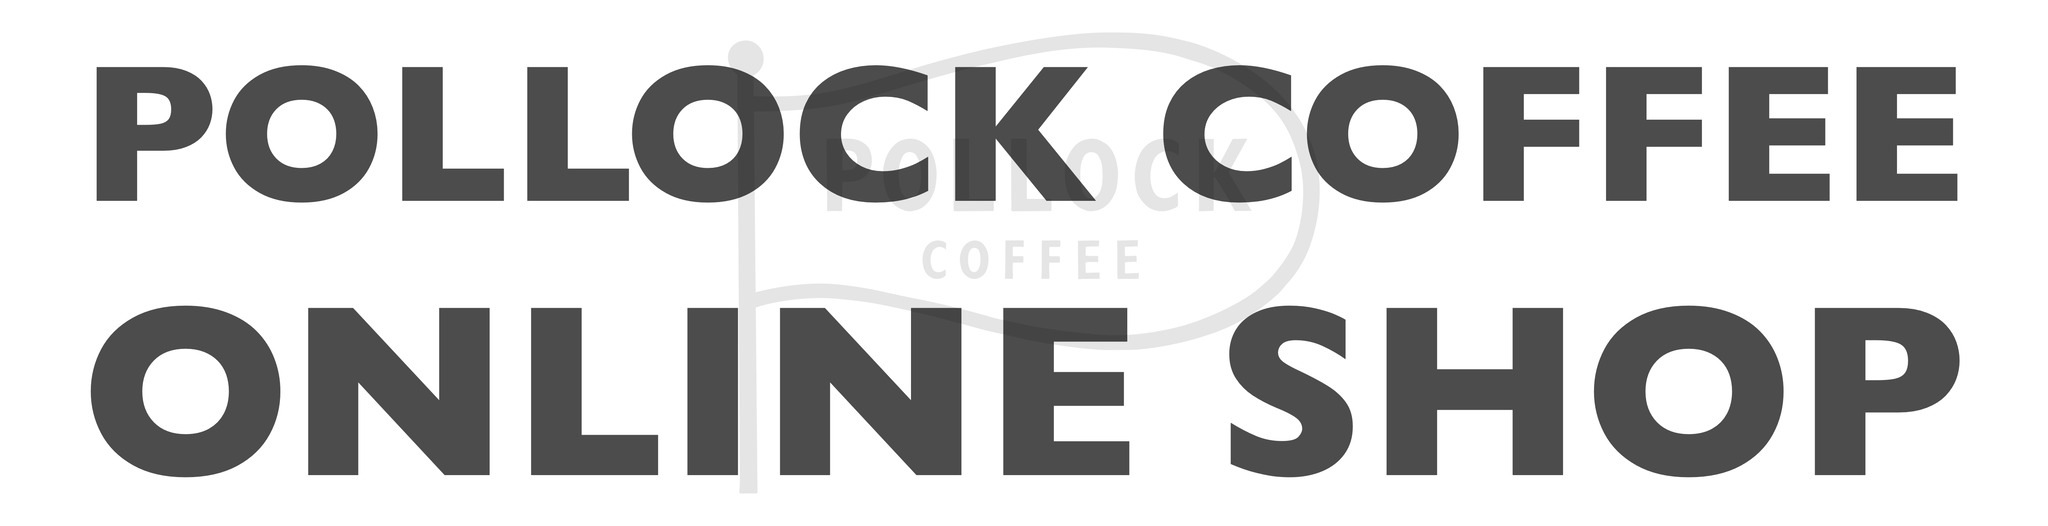 POLLOCK COFFEE _ONLINE SHOP